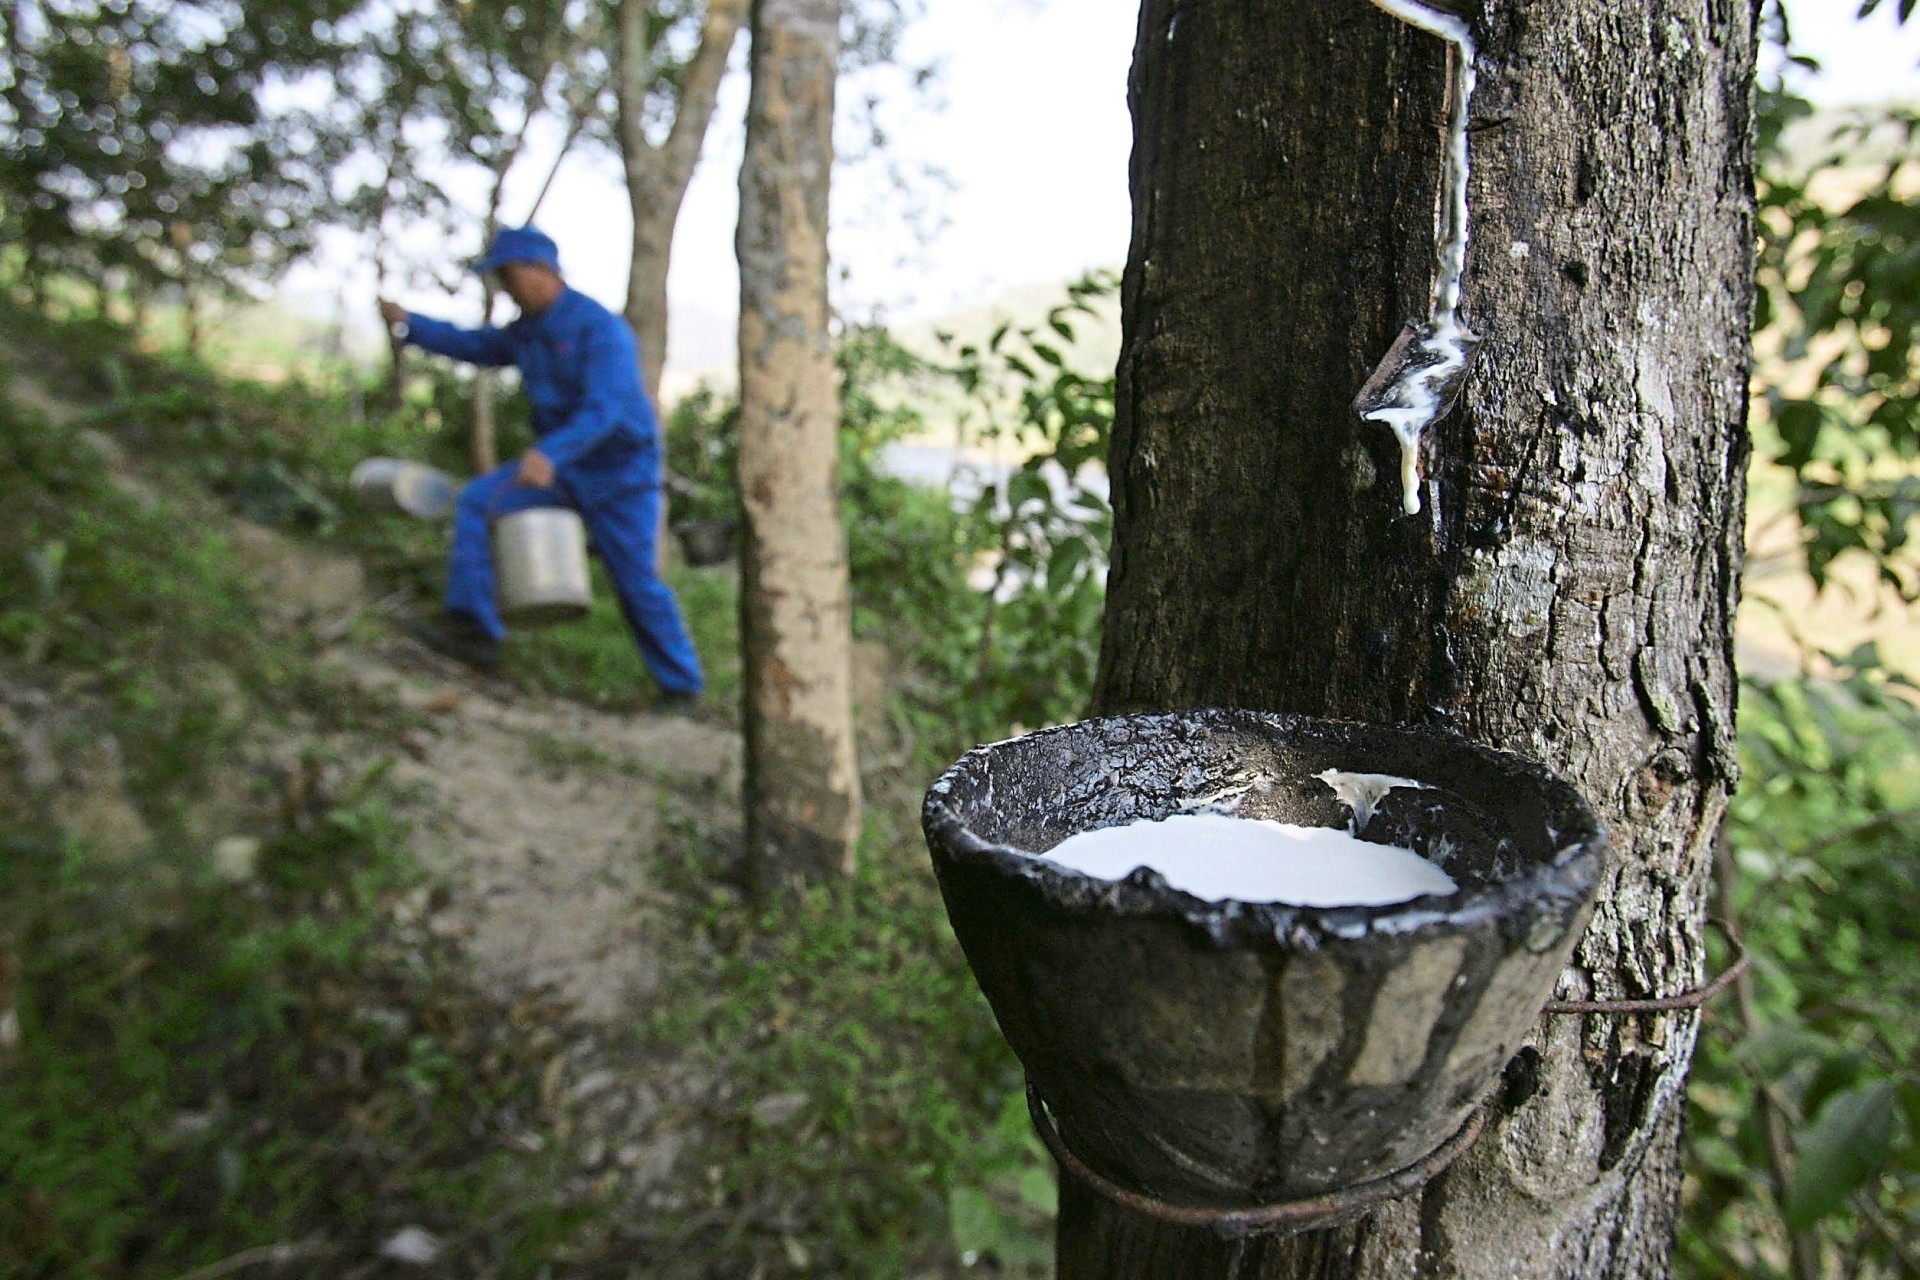 Thailand's Rubber Farming a Major Contributor to Deforestation